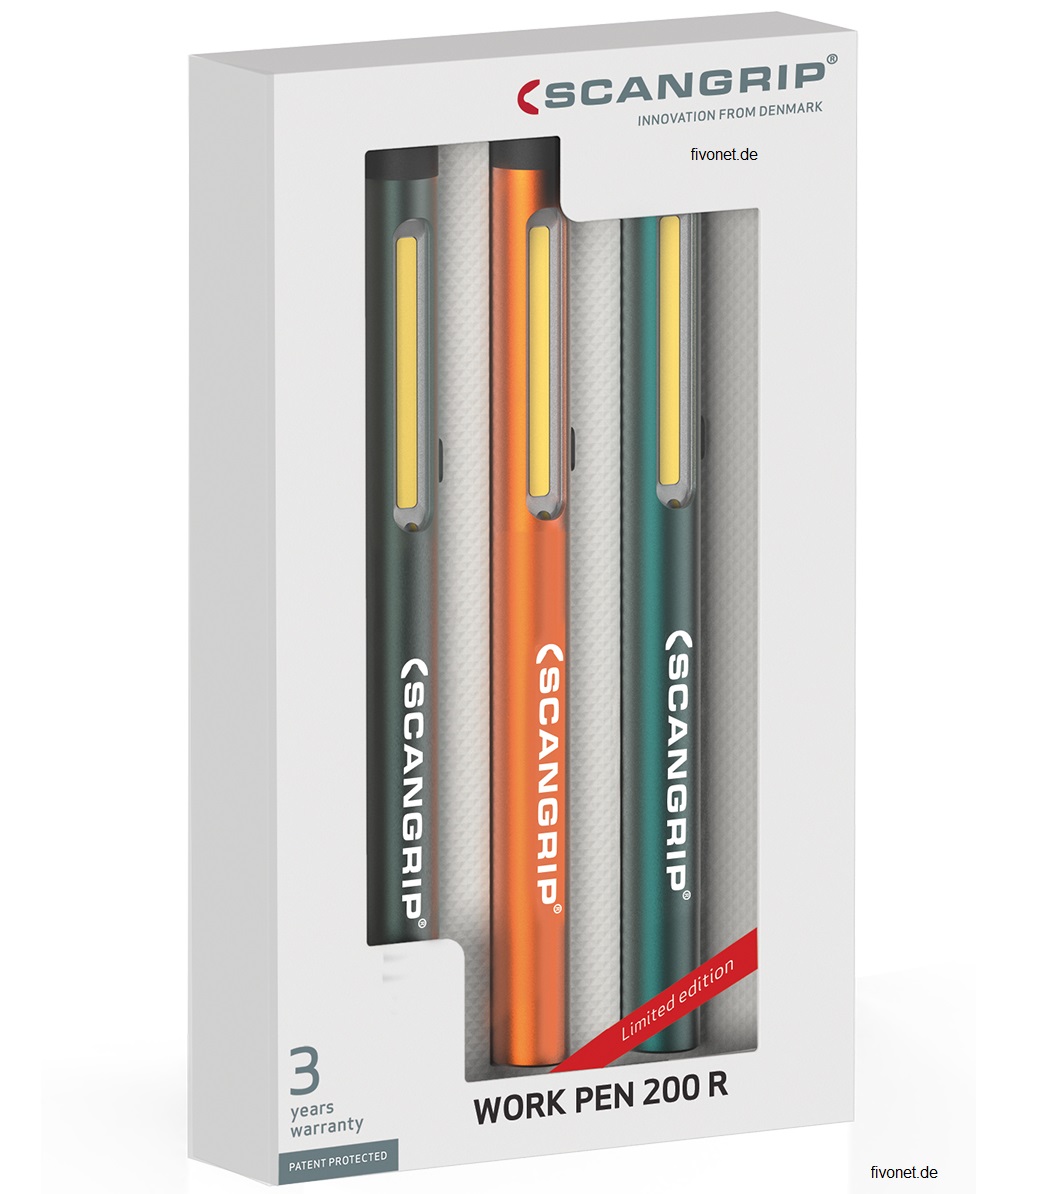 3x Scangrip 03.5127 Work Pen 200 R Akku Stiftleuchte Promotion Kit Set